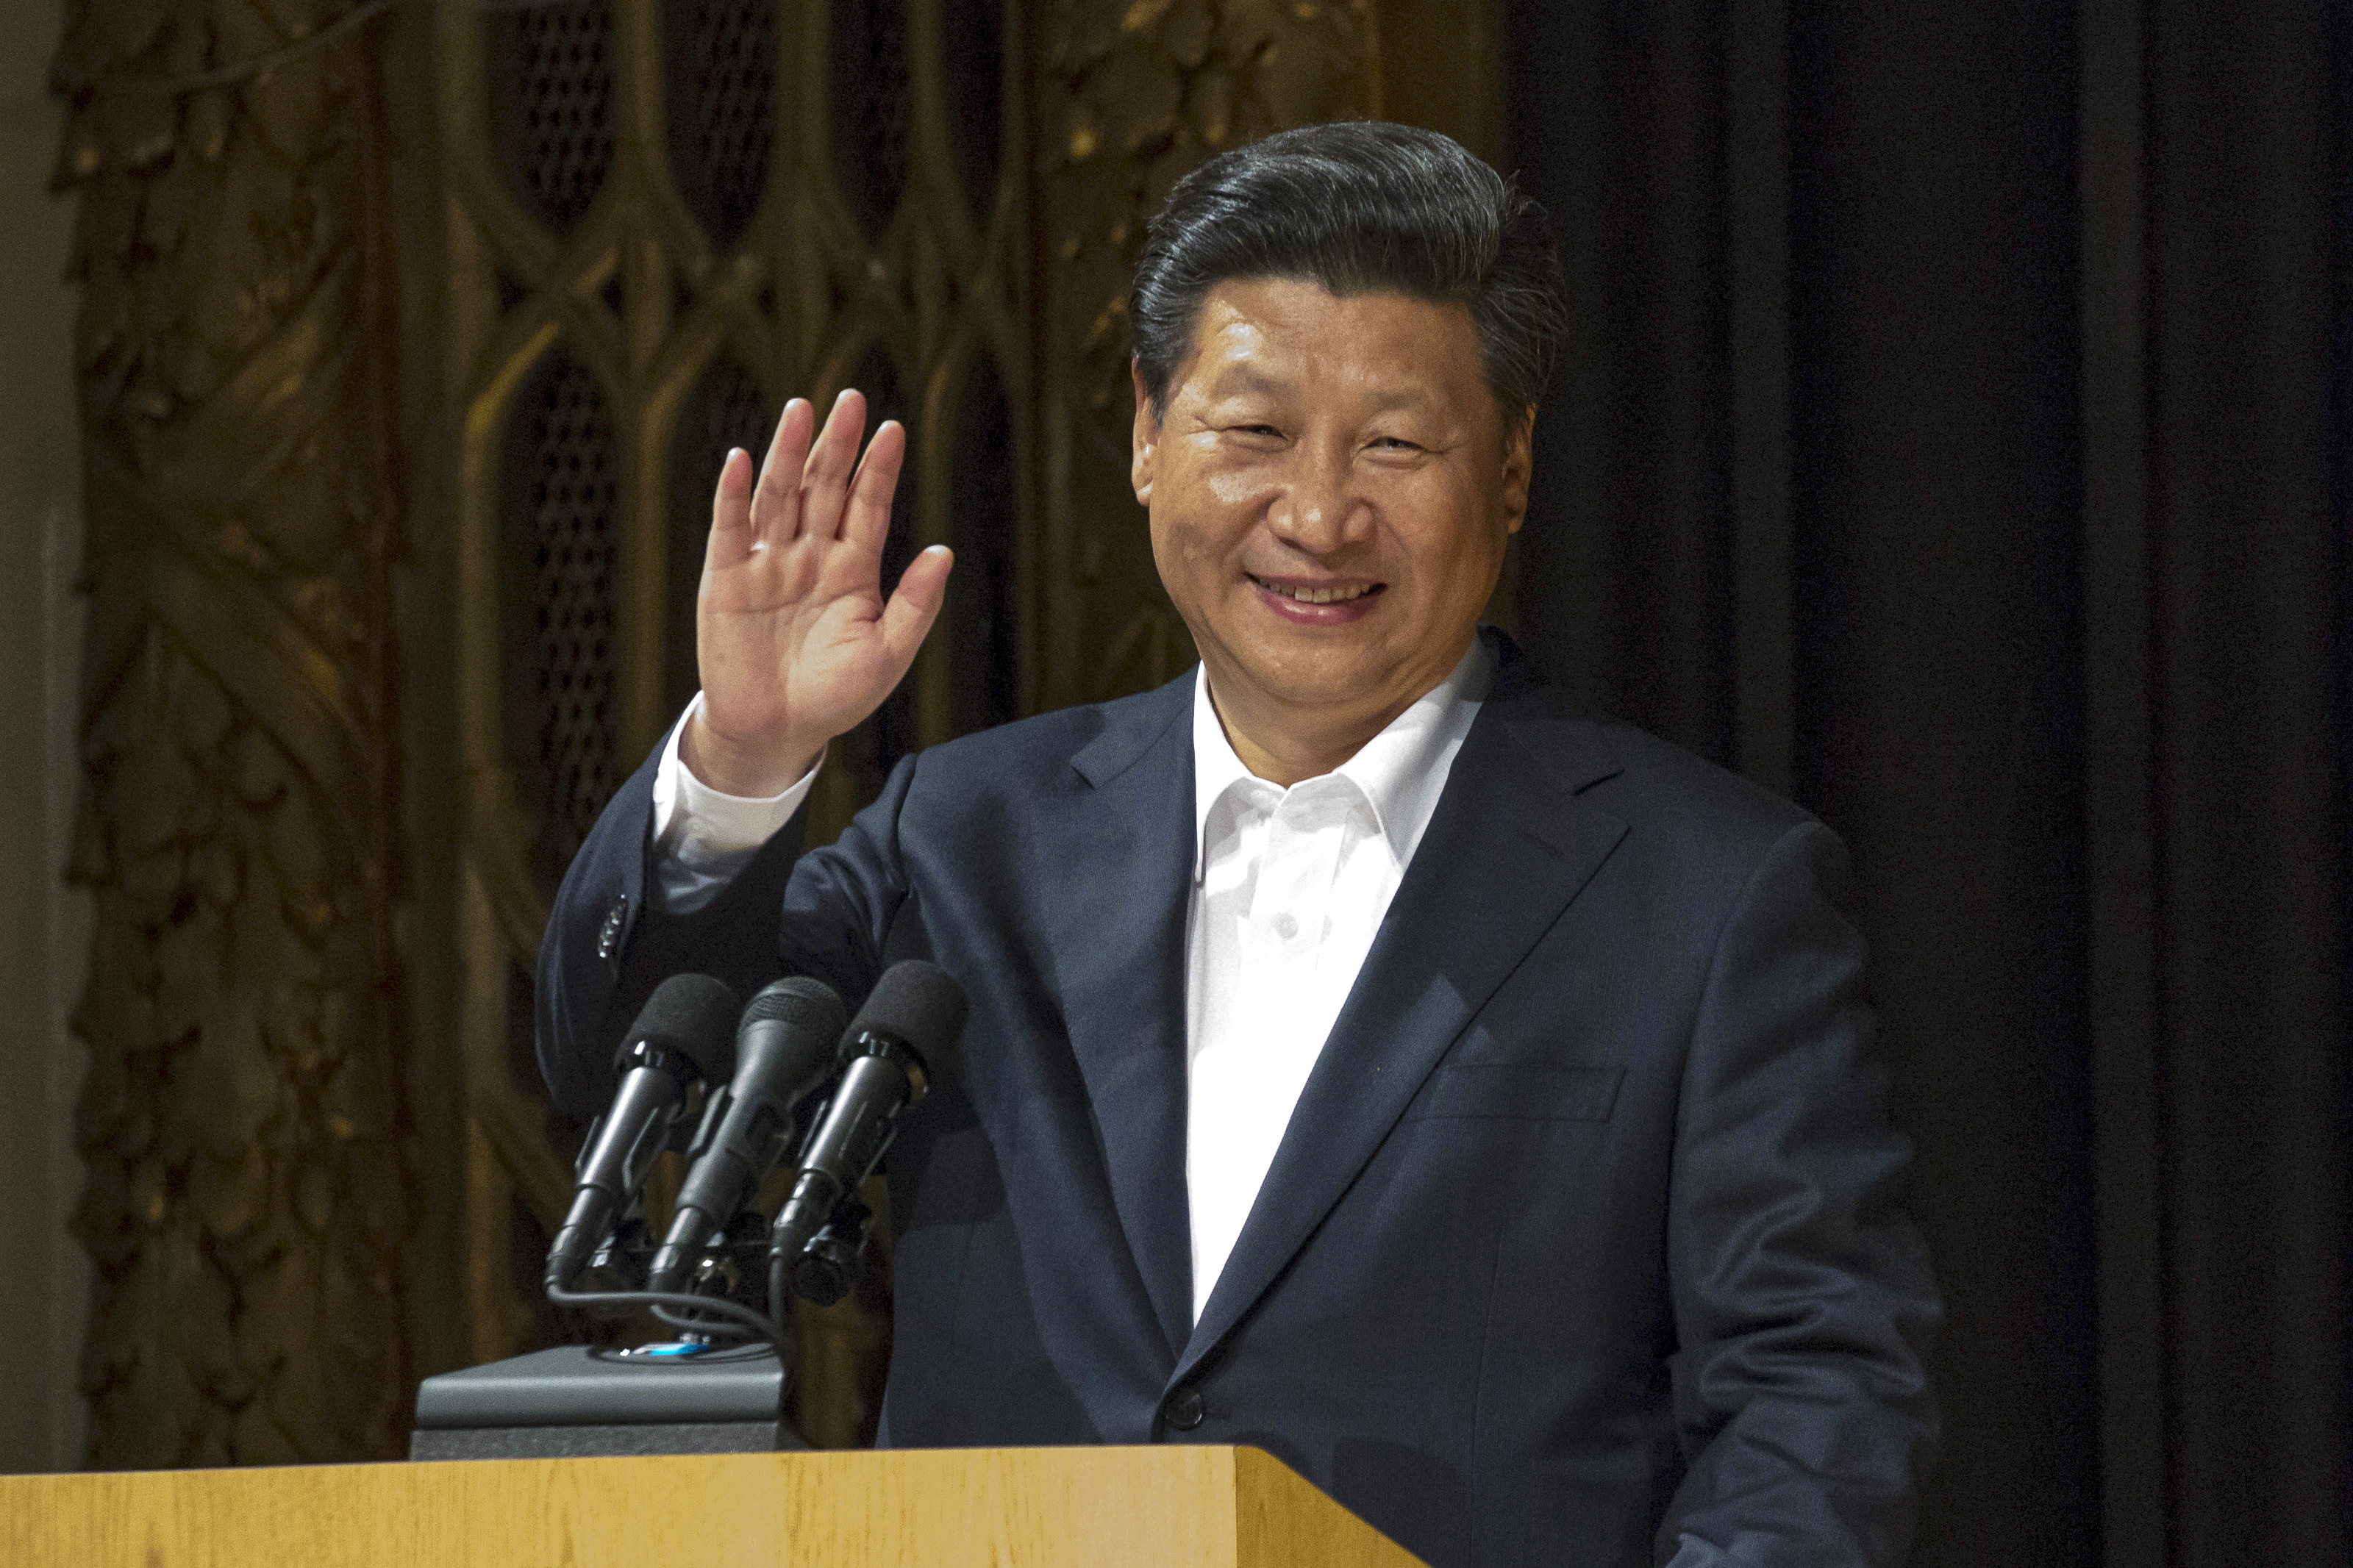 Chinese President Xi Jinping heads to Washington, D.C. CBS News